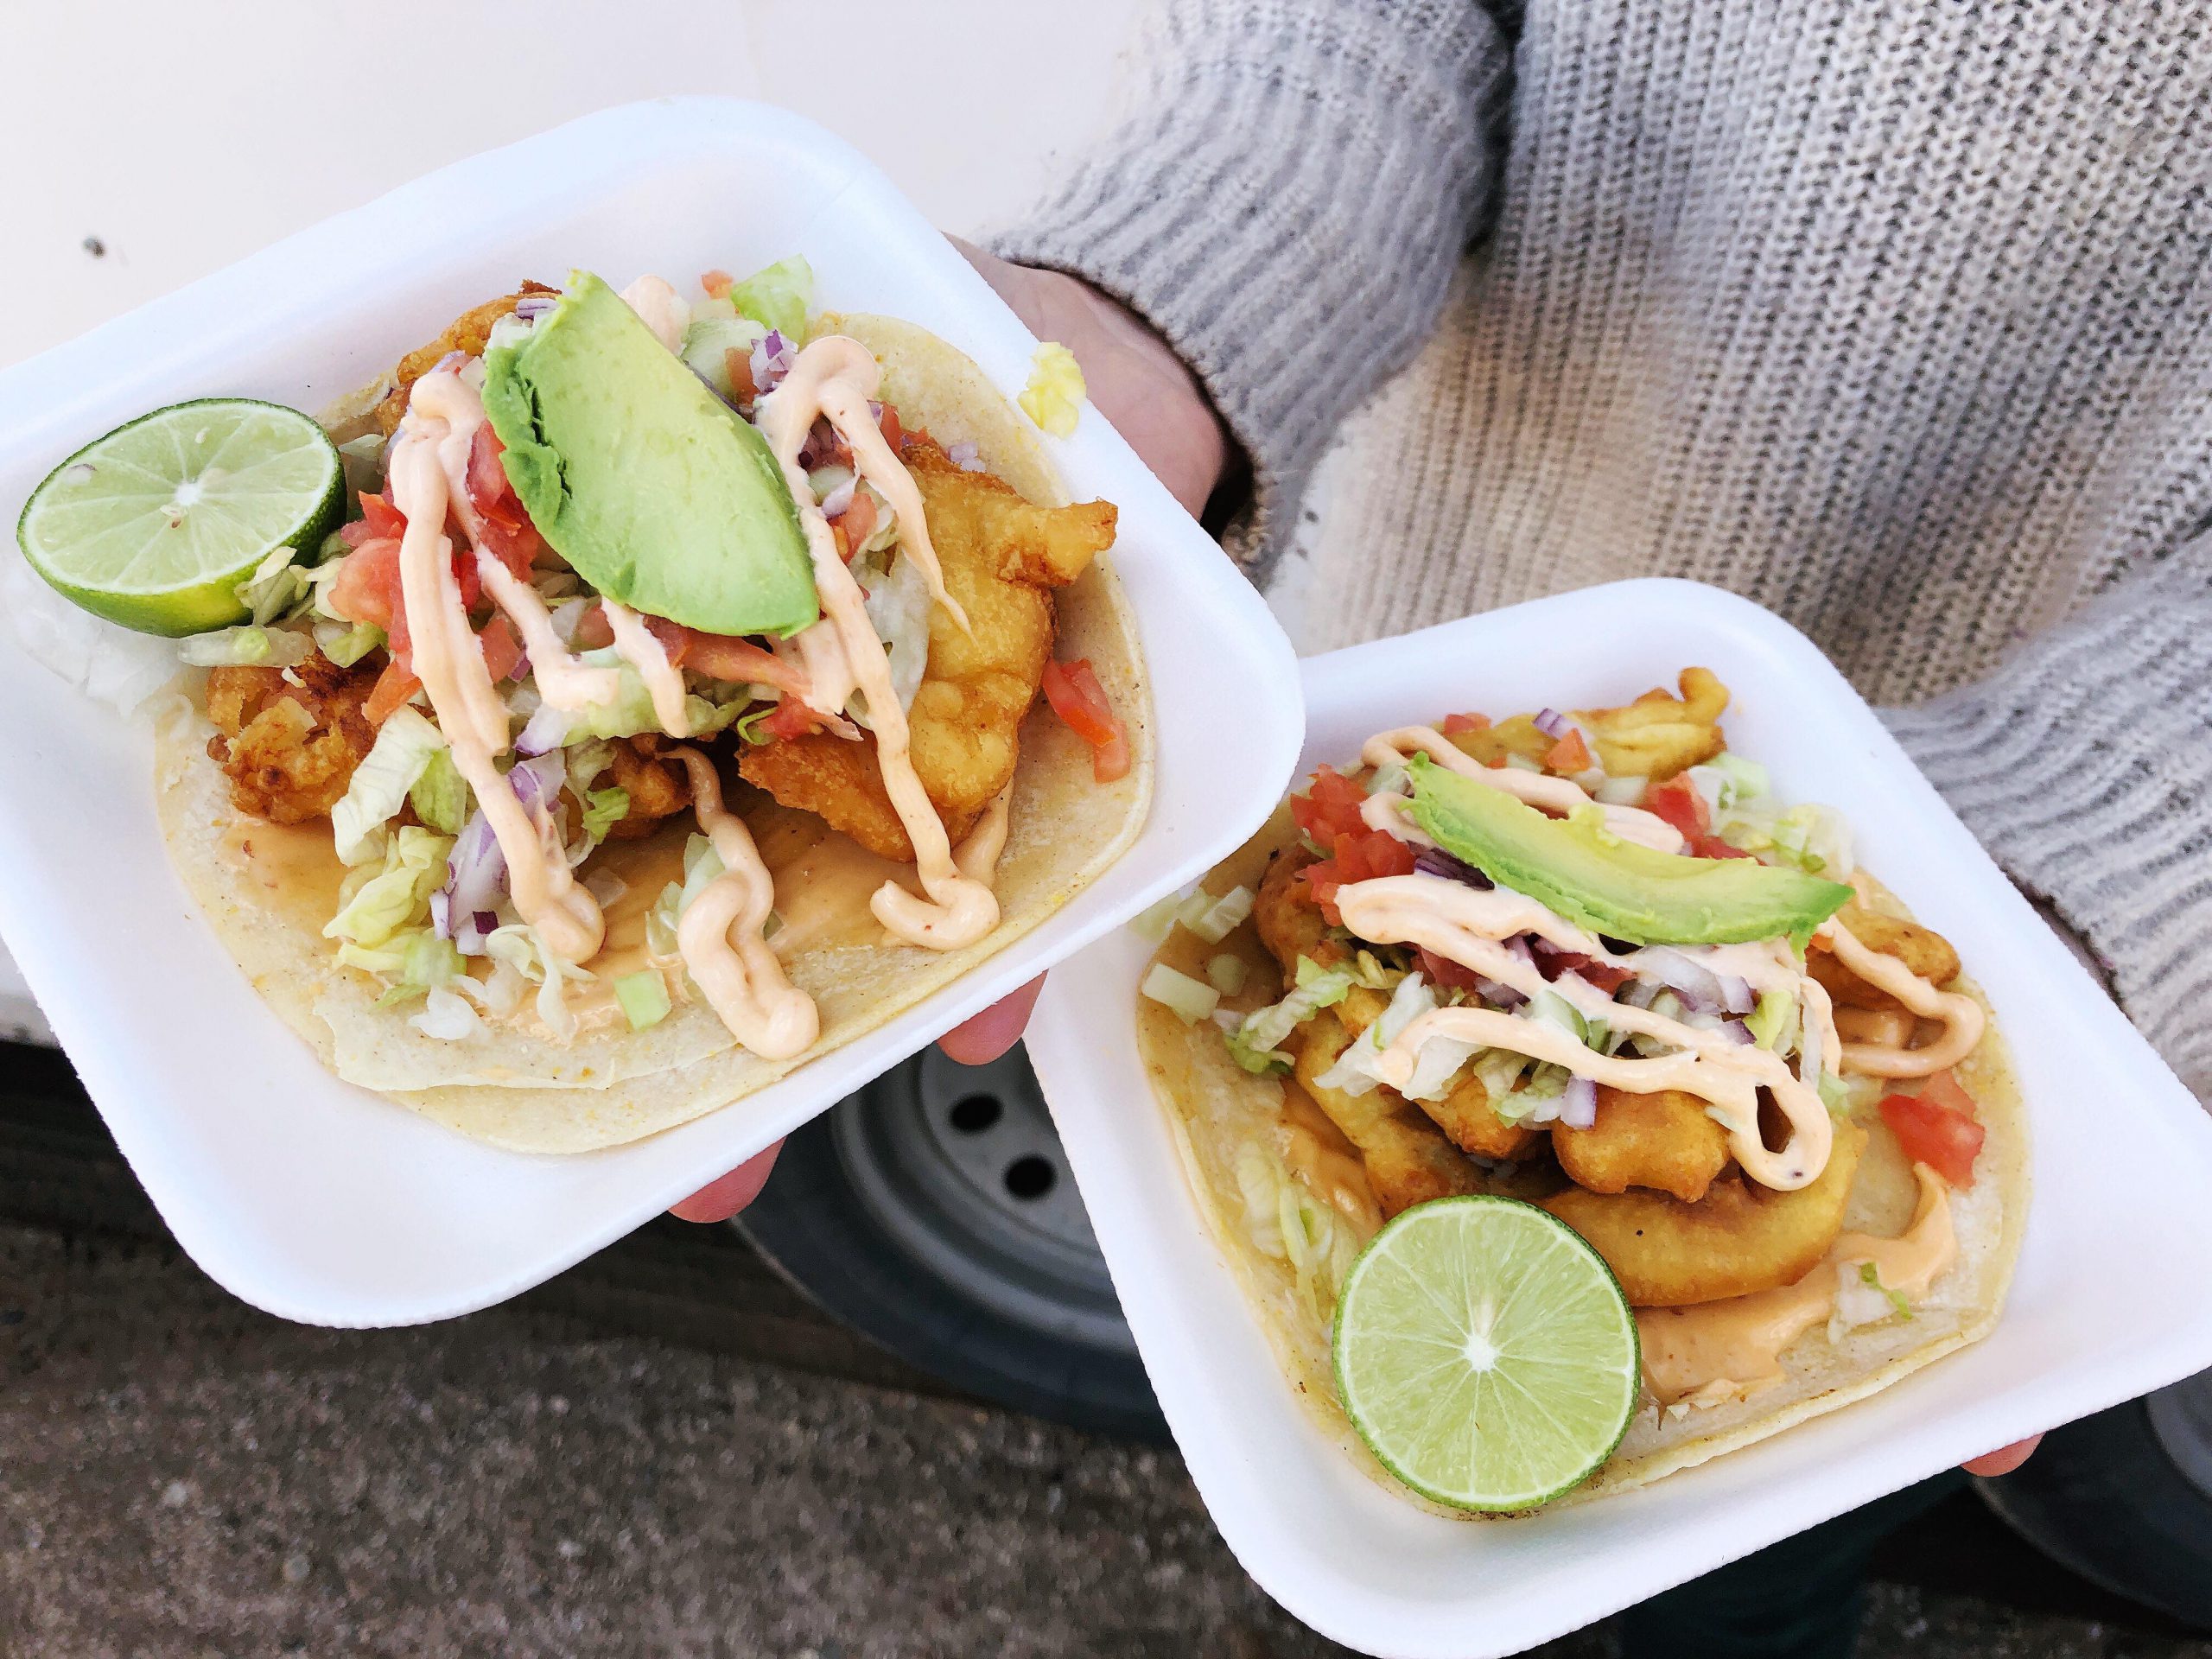 Shrimp & Fish Tacos at La Palma (Credit: Melissa Stihl)